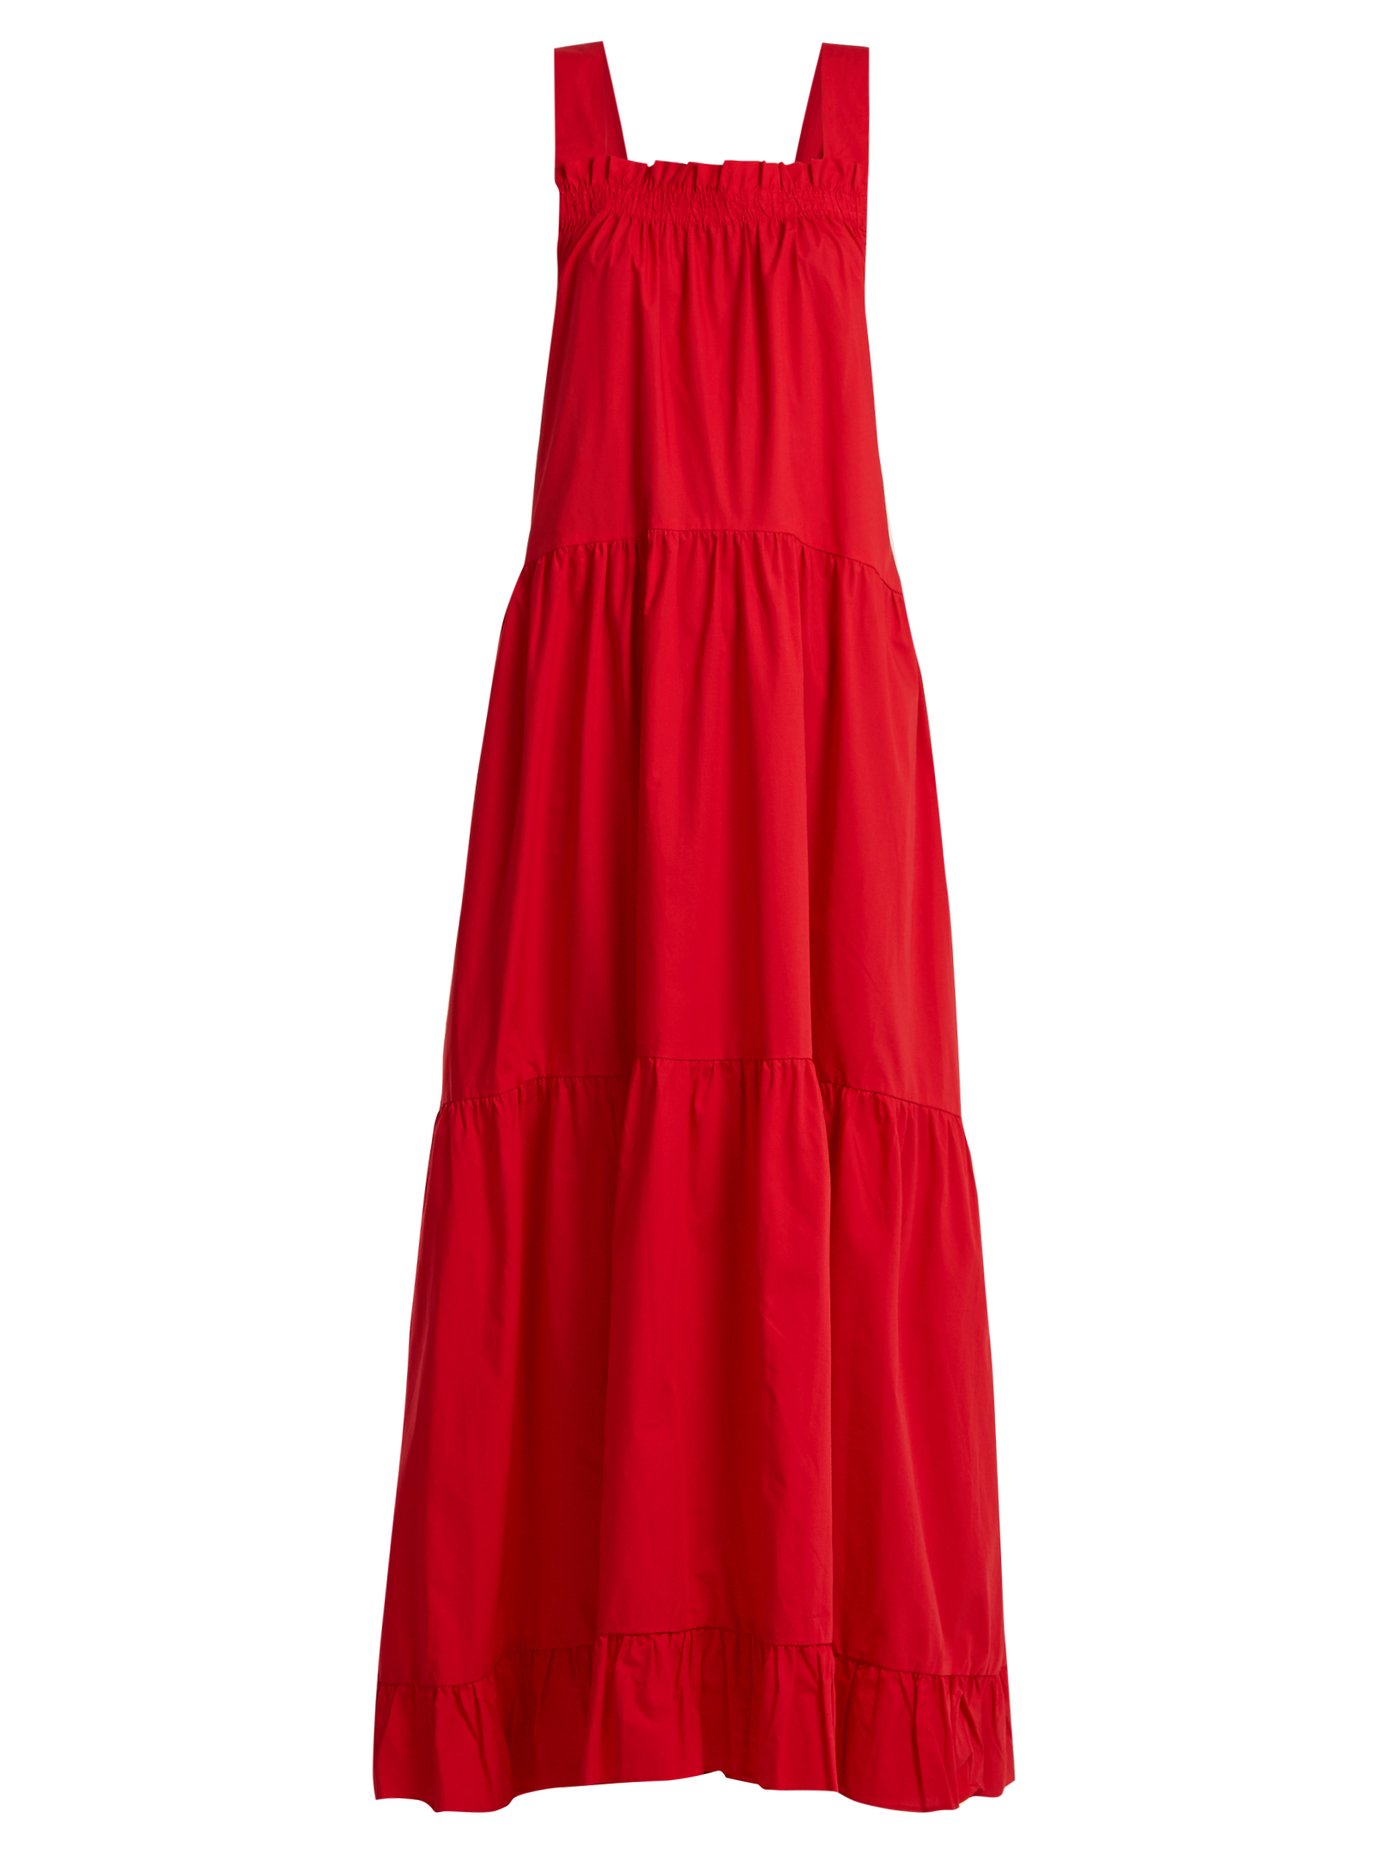 lee mathews red dress